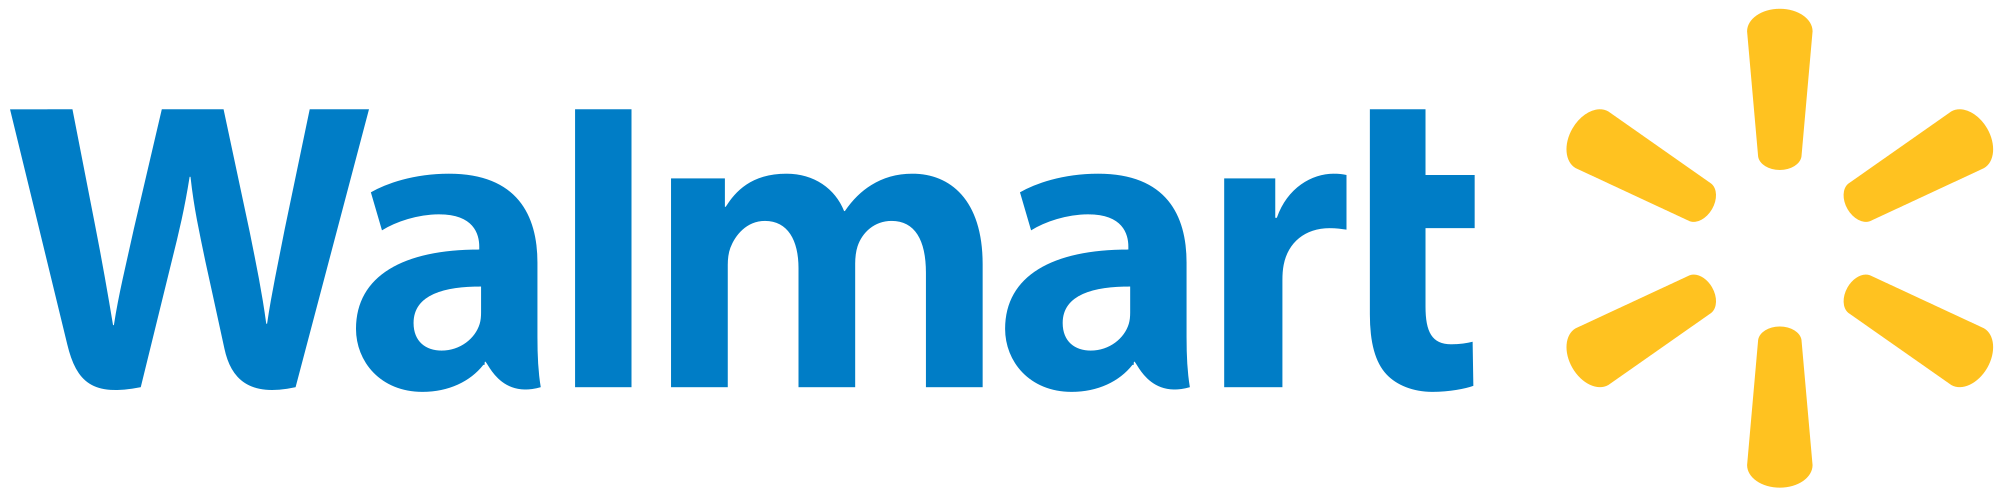 File:Walmart logo.svg